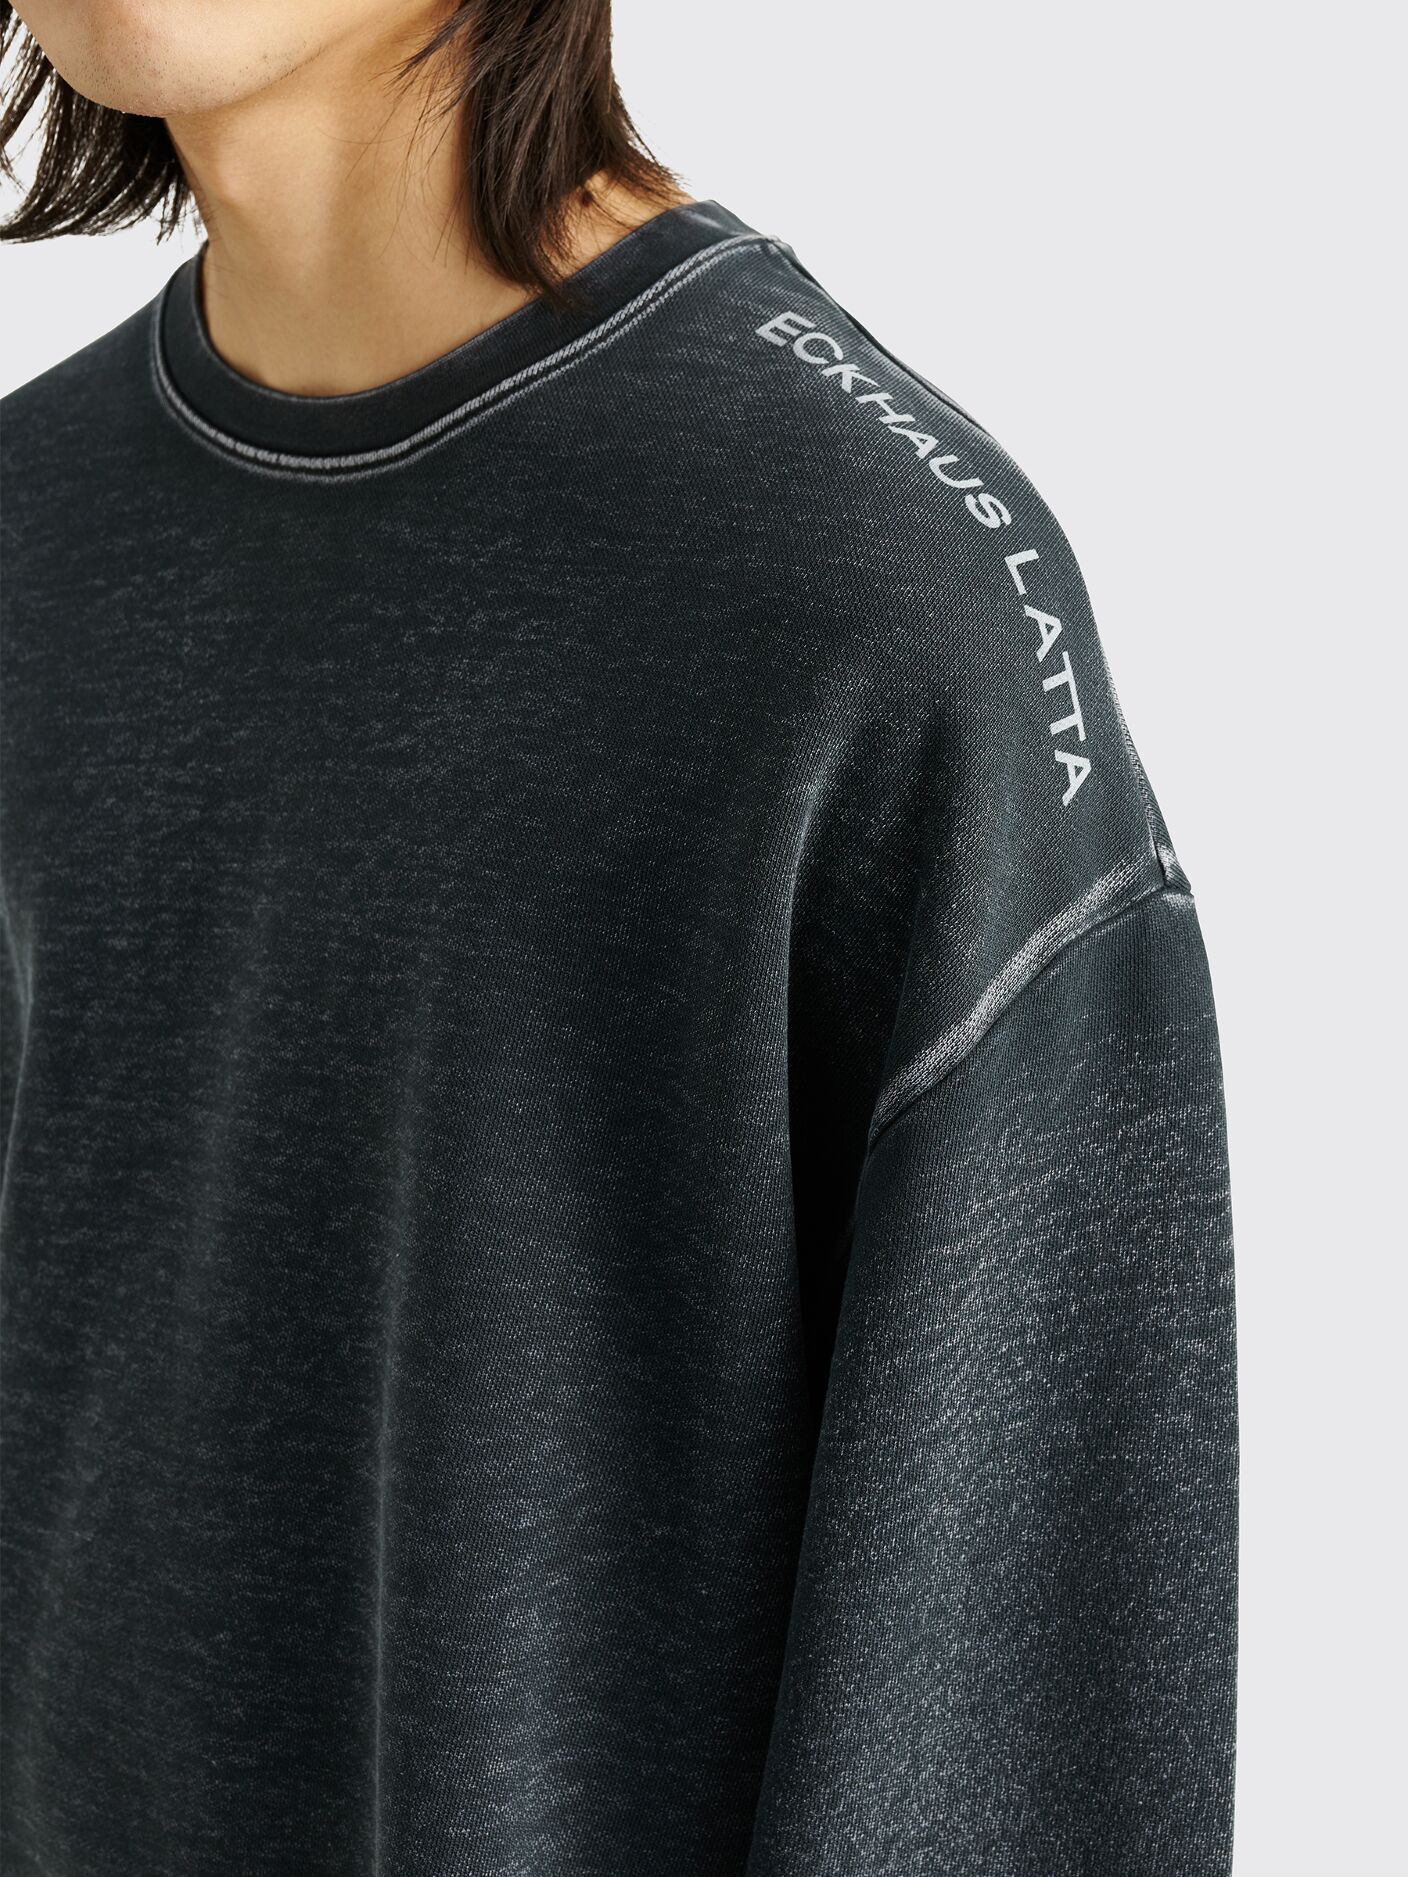 Très Bien - Eckhaus Latta Logo Sweatshirt Washed Charcoal